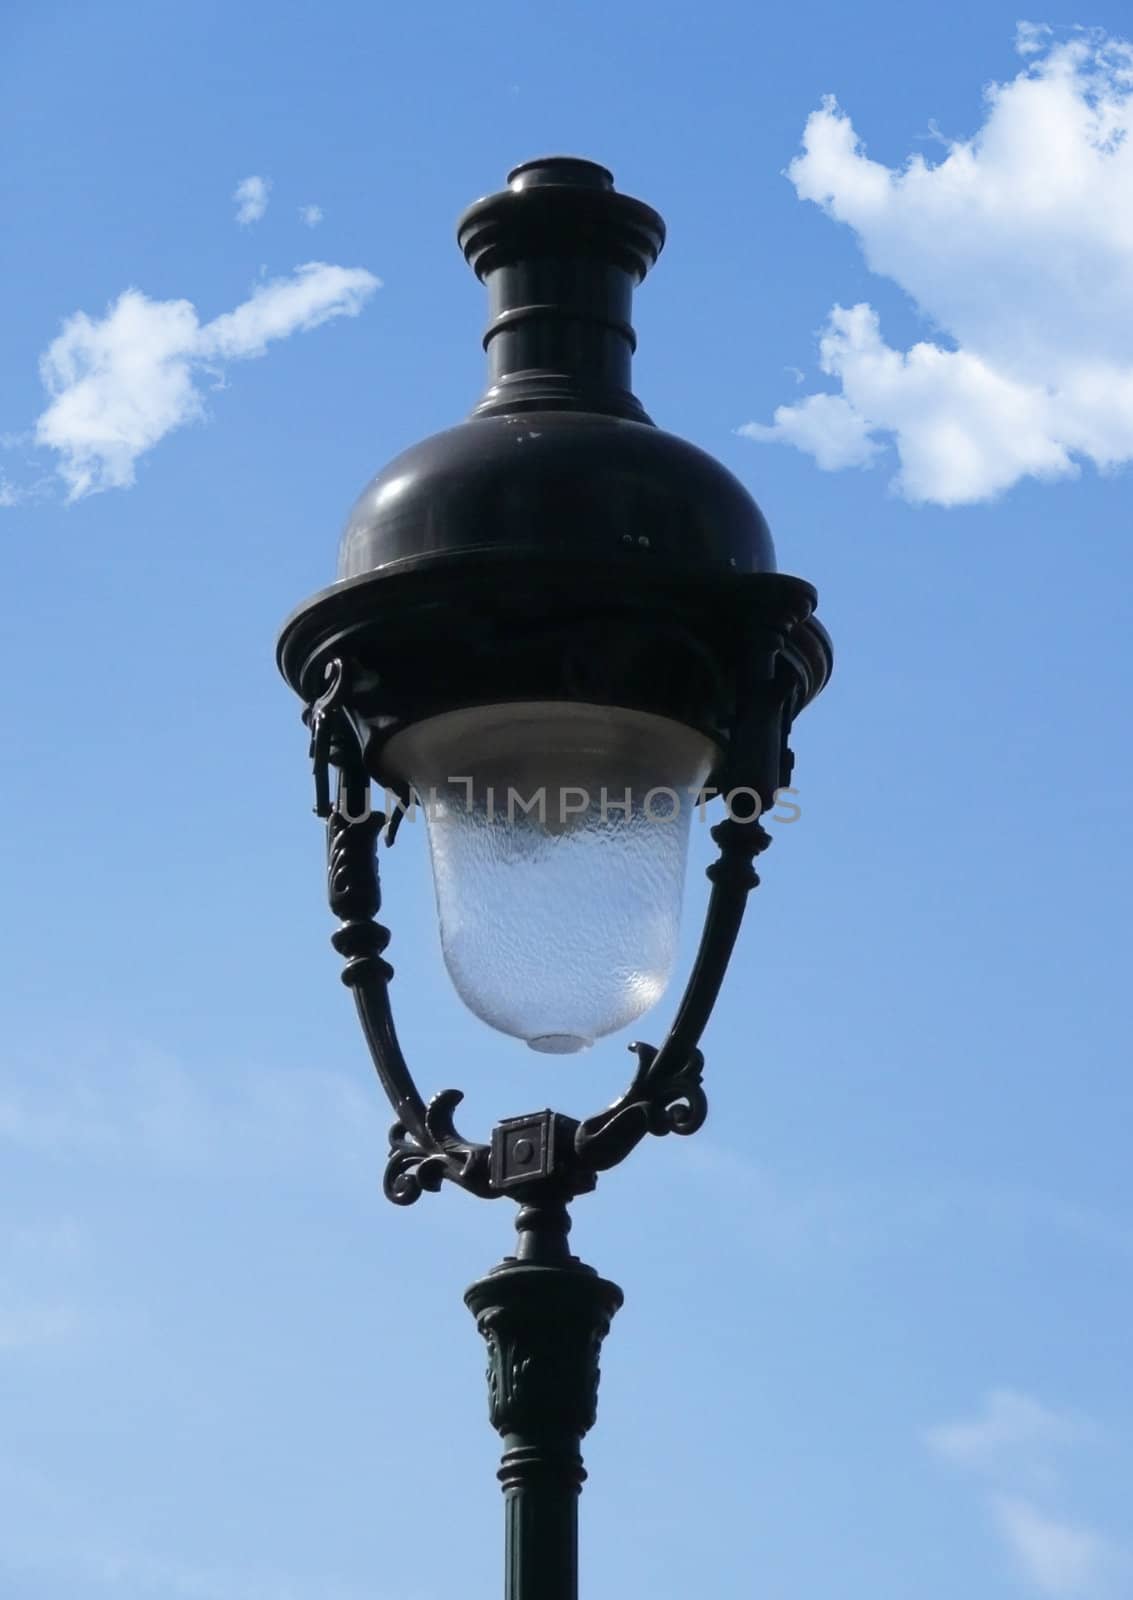 Old Street lamp by daboost